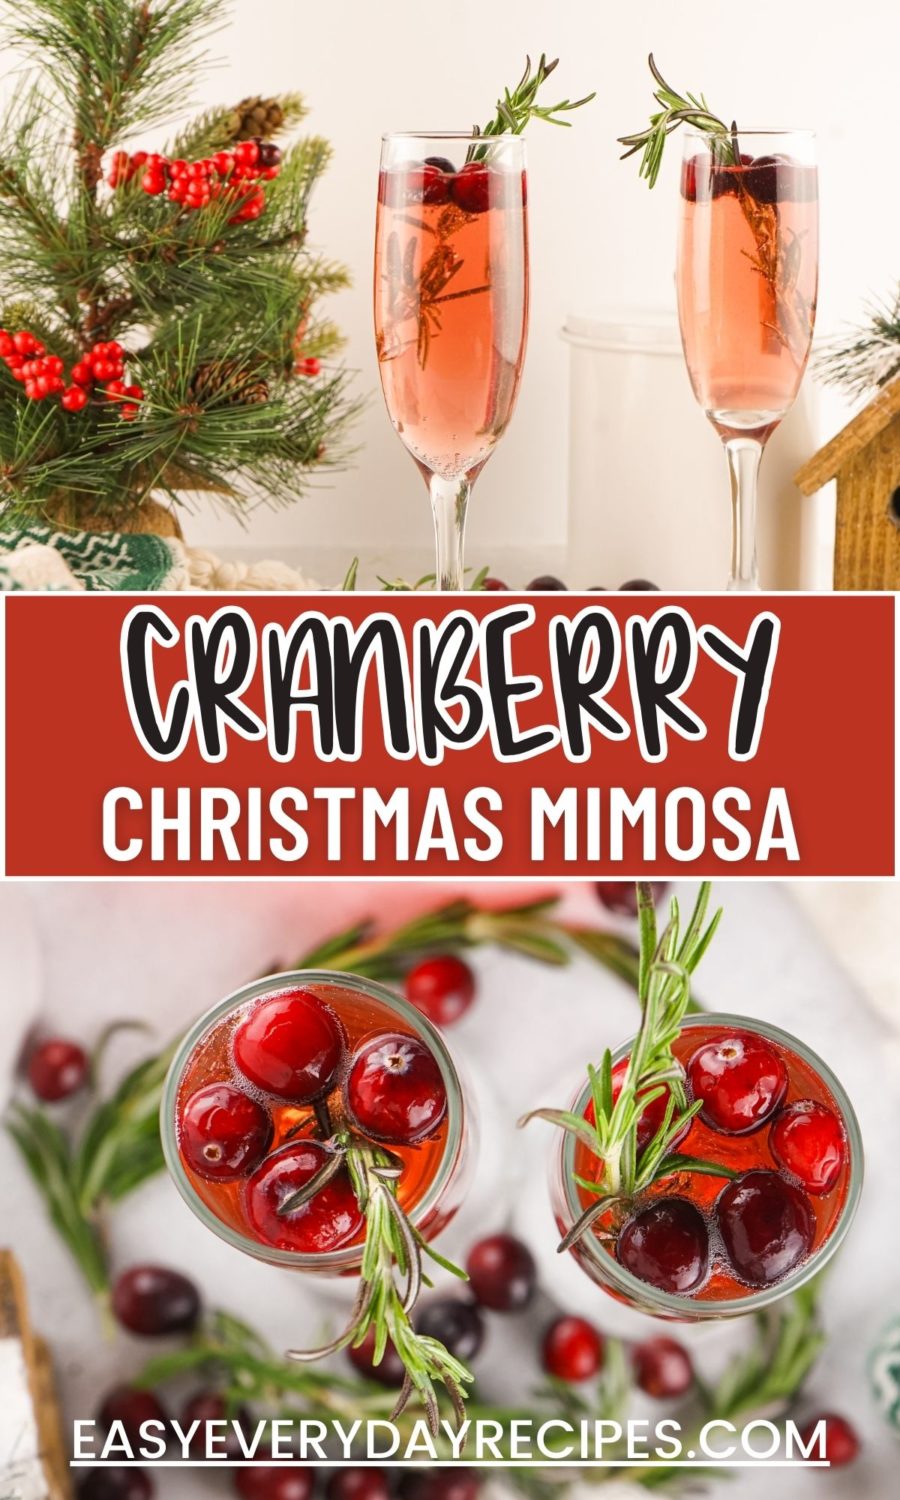 Cranberry christmas mimosa.